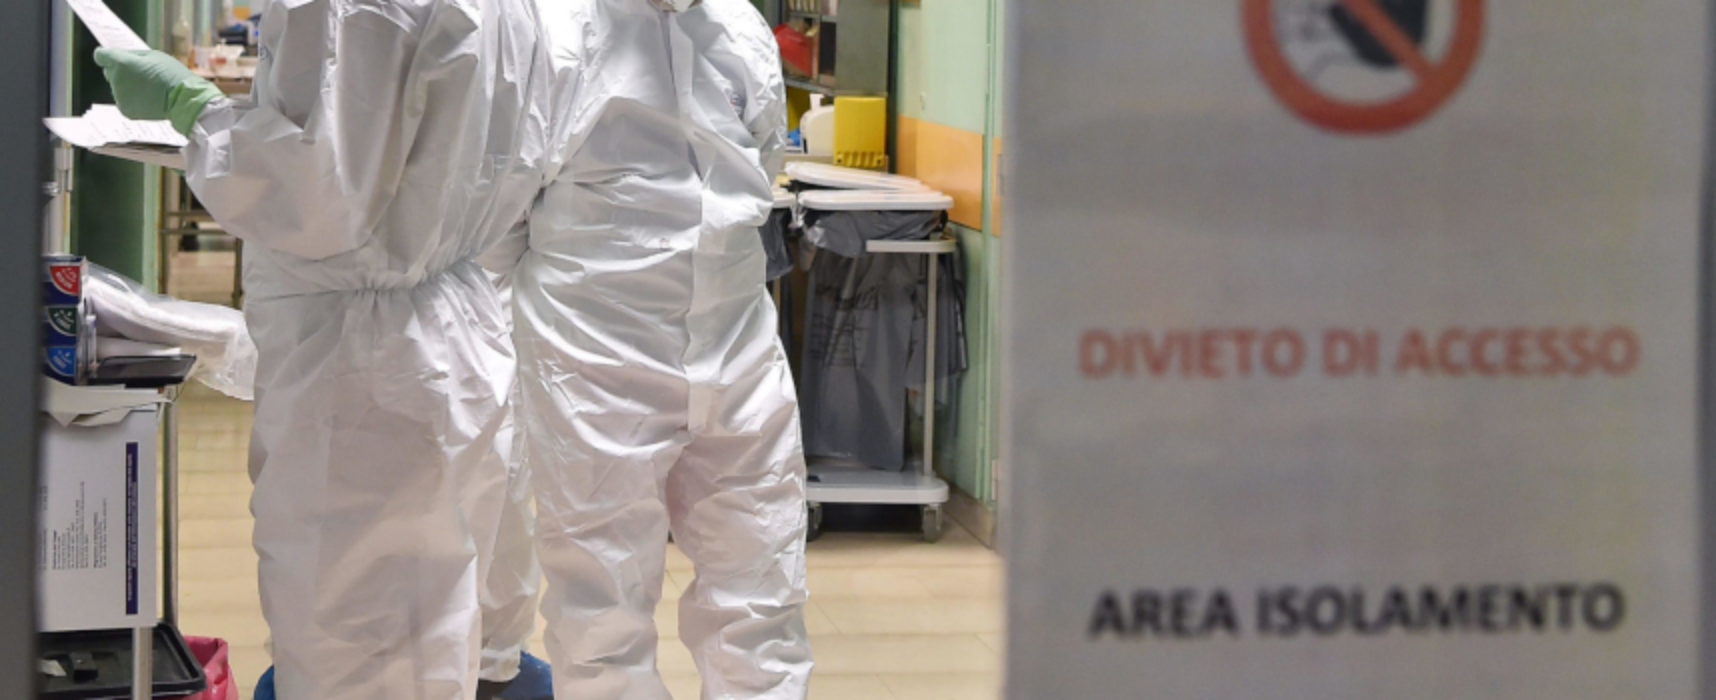 Coronavirus: +22 ricoveri in reparti ordinari oggi in Puglia, registrati 11 decessi